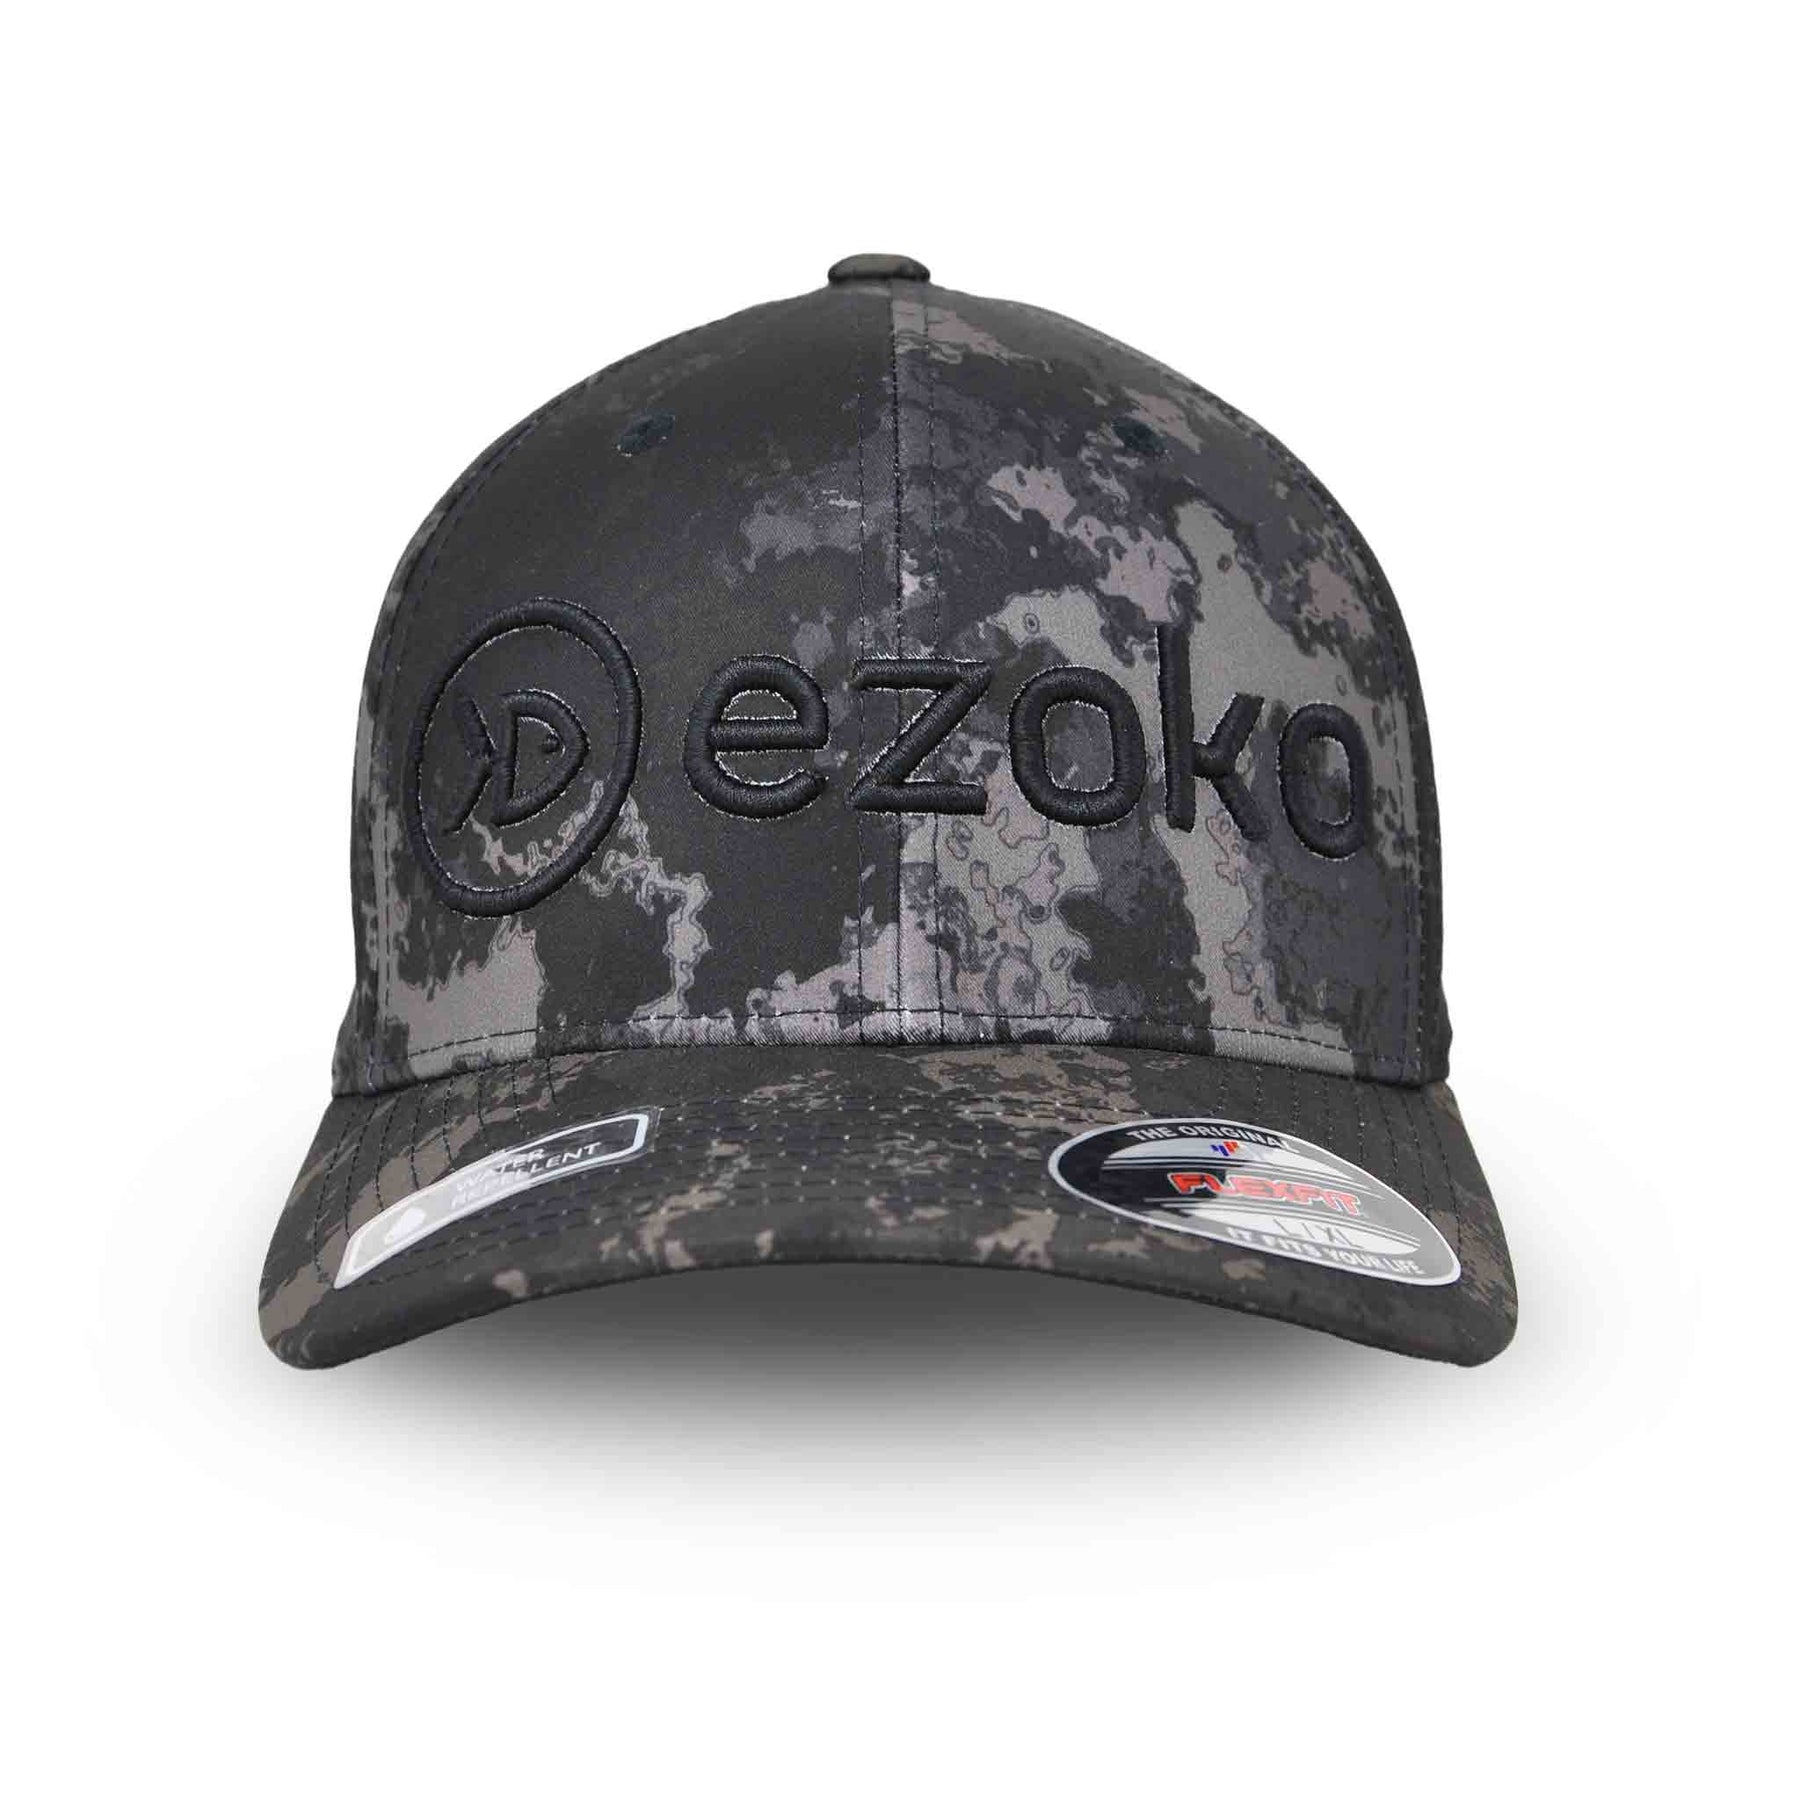 View of Hats Ezoko FLEXFIT Cap Veil Camo Poseidon Black 3D-Puff available at EZOKO Pike and Musky Shop